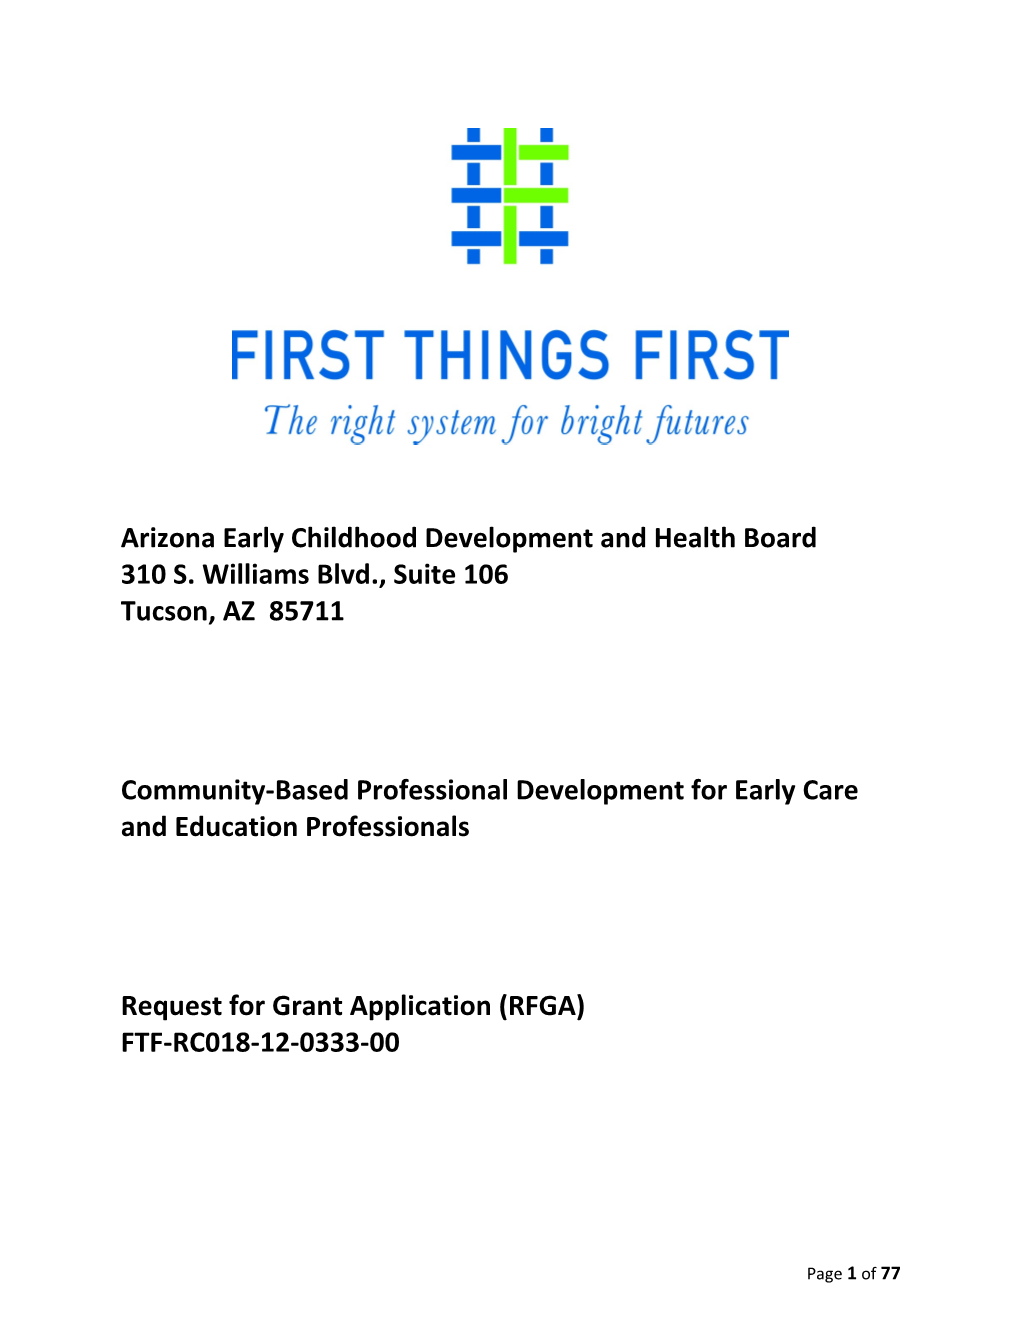 Arizona Early Childhood Development and Health Board